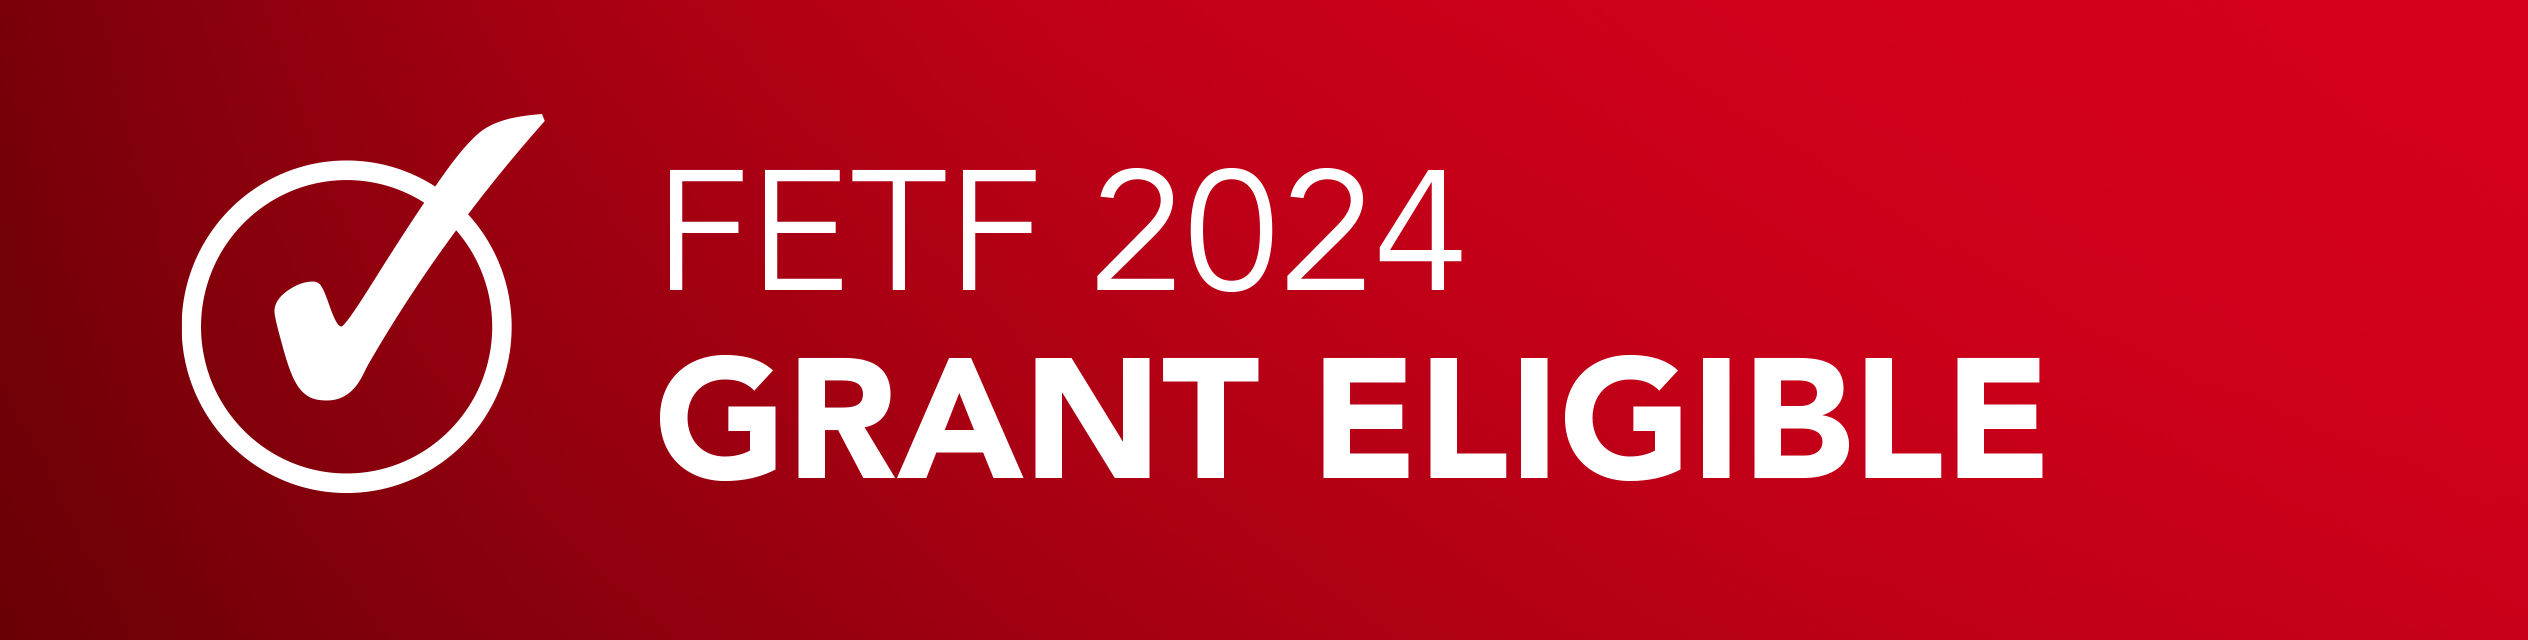 FETF 2024 Grant Eligible - red banner